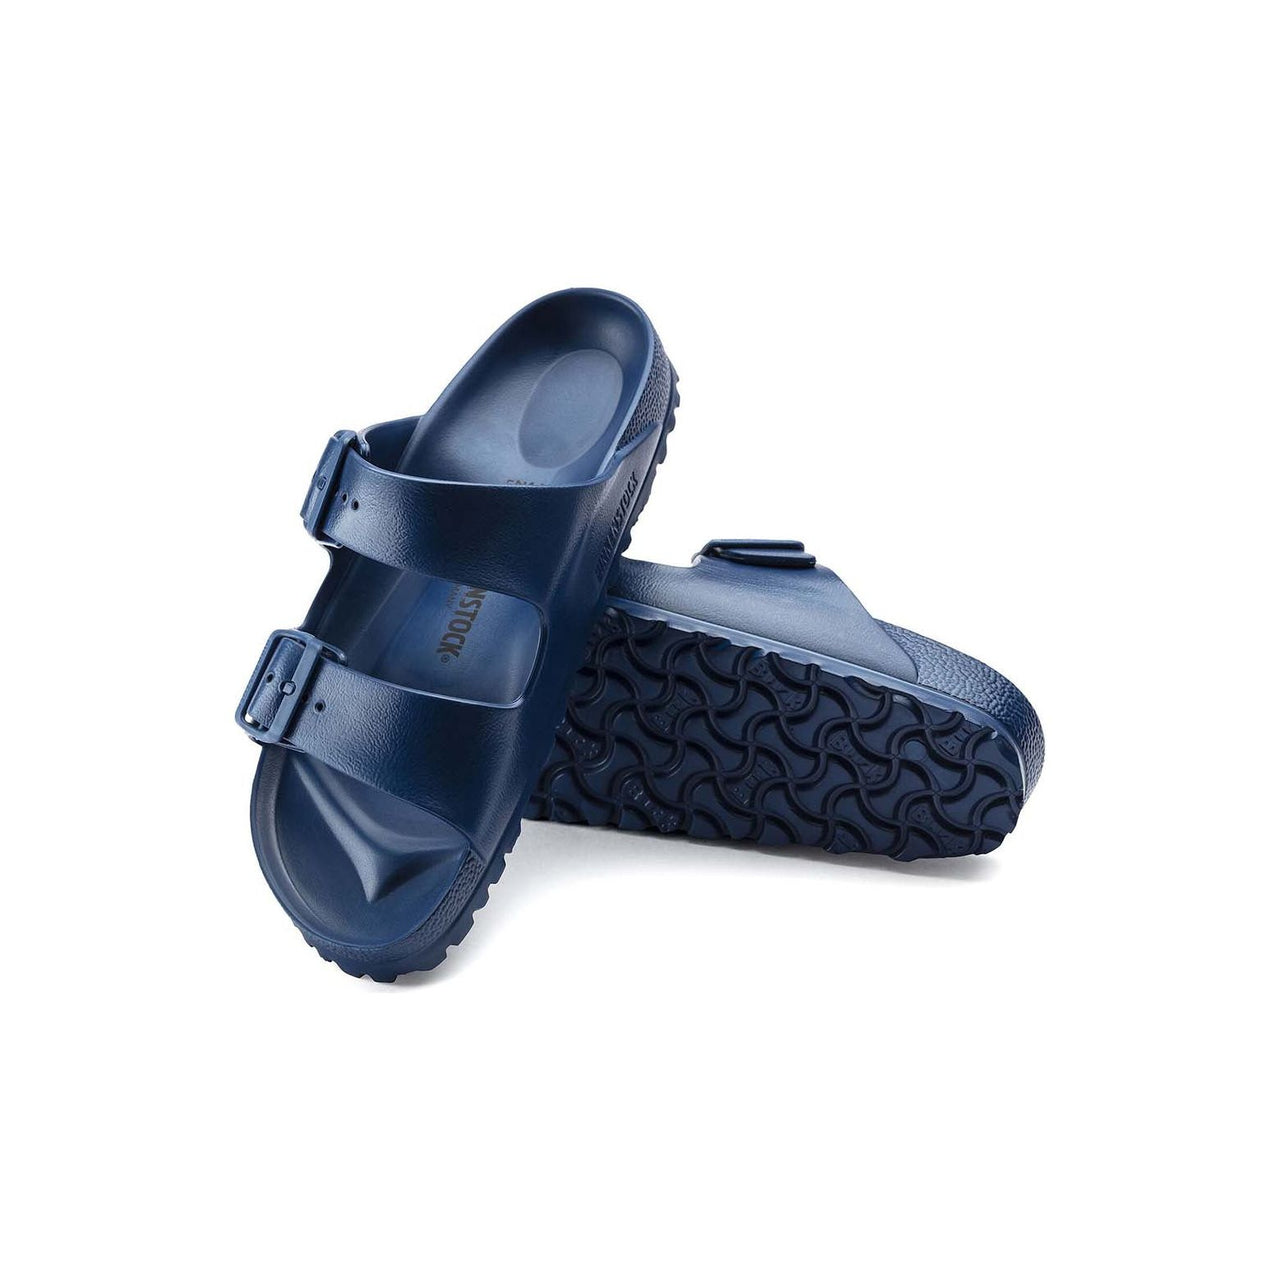 Unisex Birkenstock Arizona Eva Sandals with adjustable straps